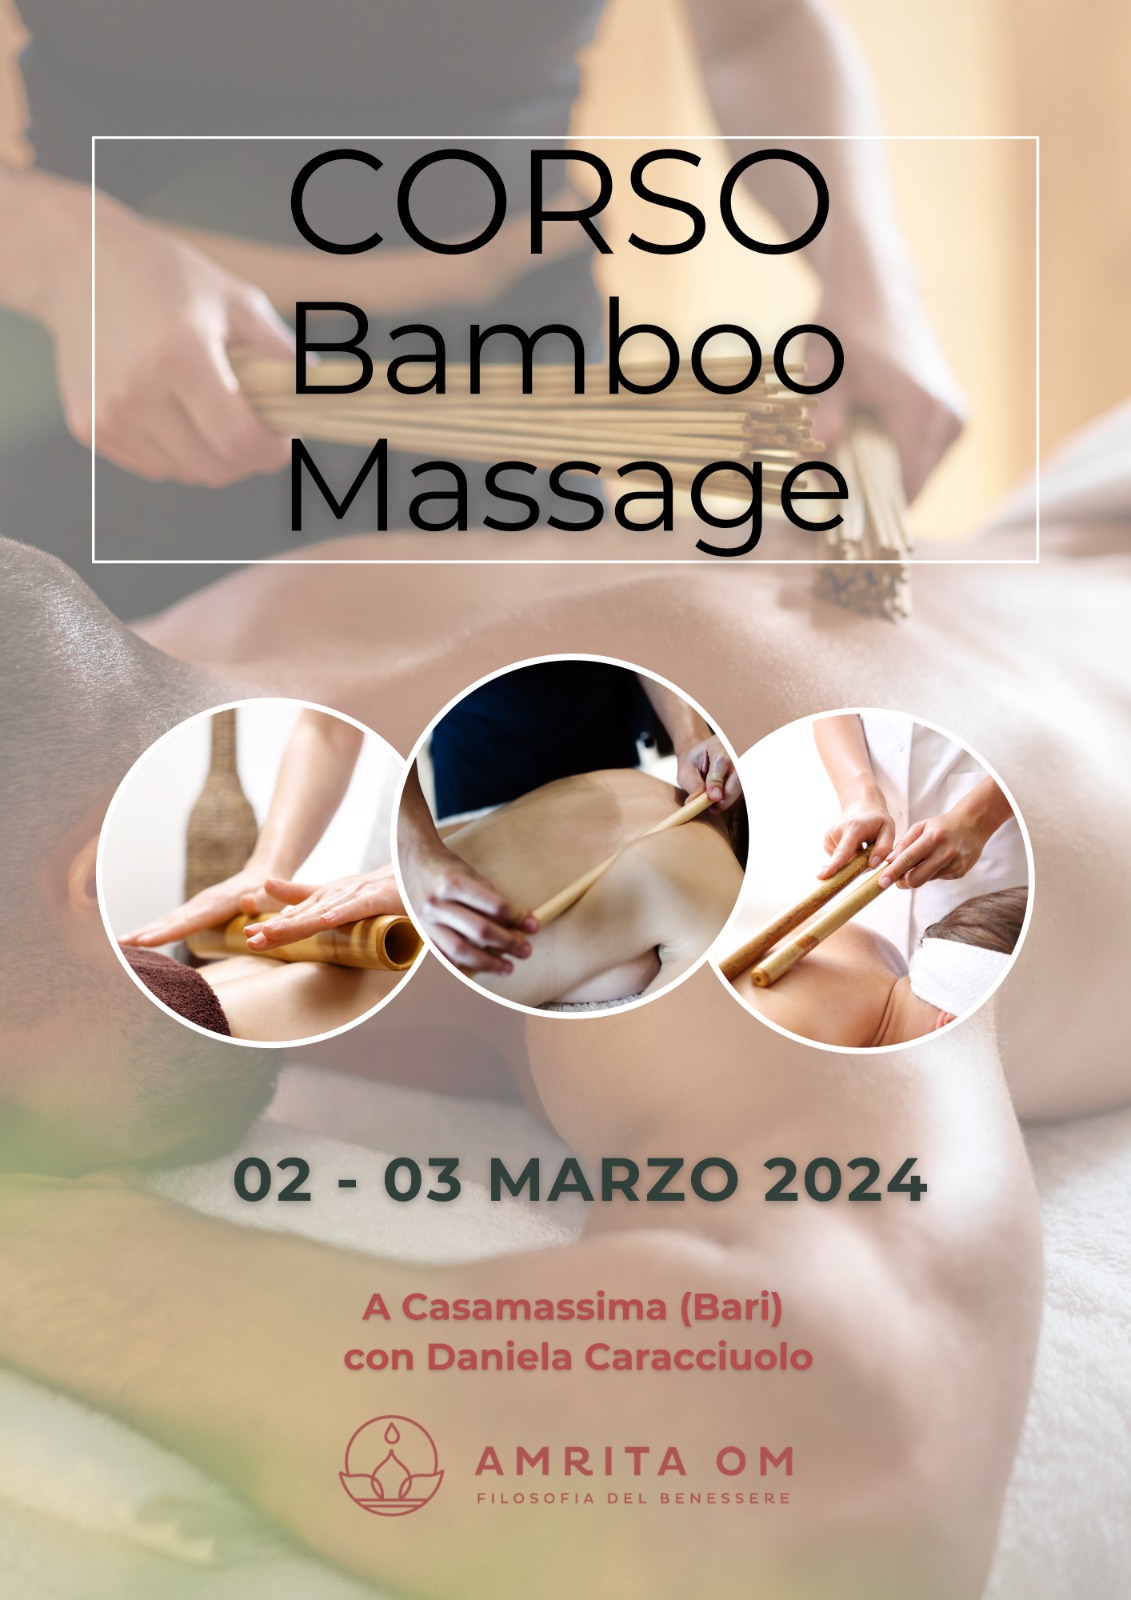 Bamboo Massage Course 2-3 March 2024 with Daniela Caracciuolo in Casamassima (BA) at @ AMRITA OM